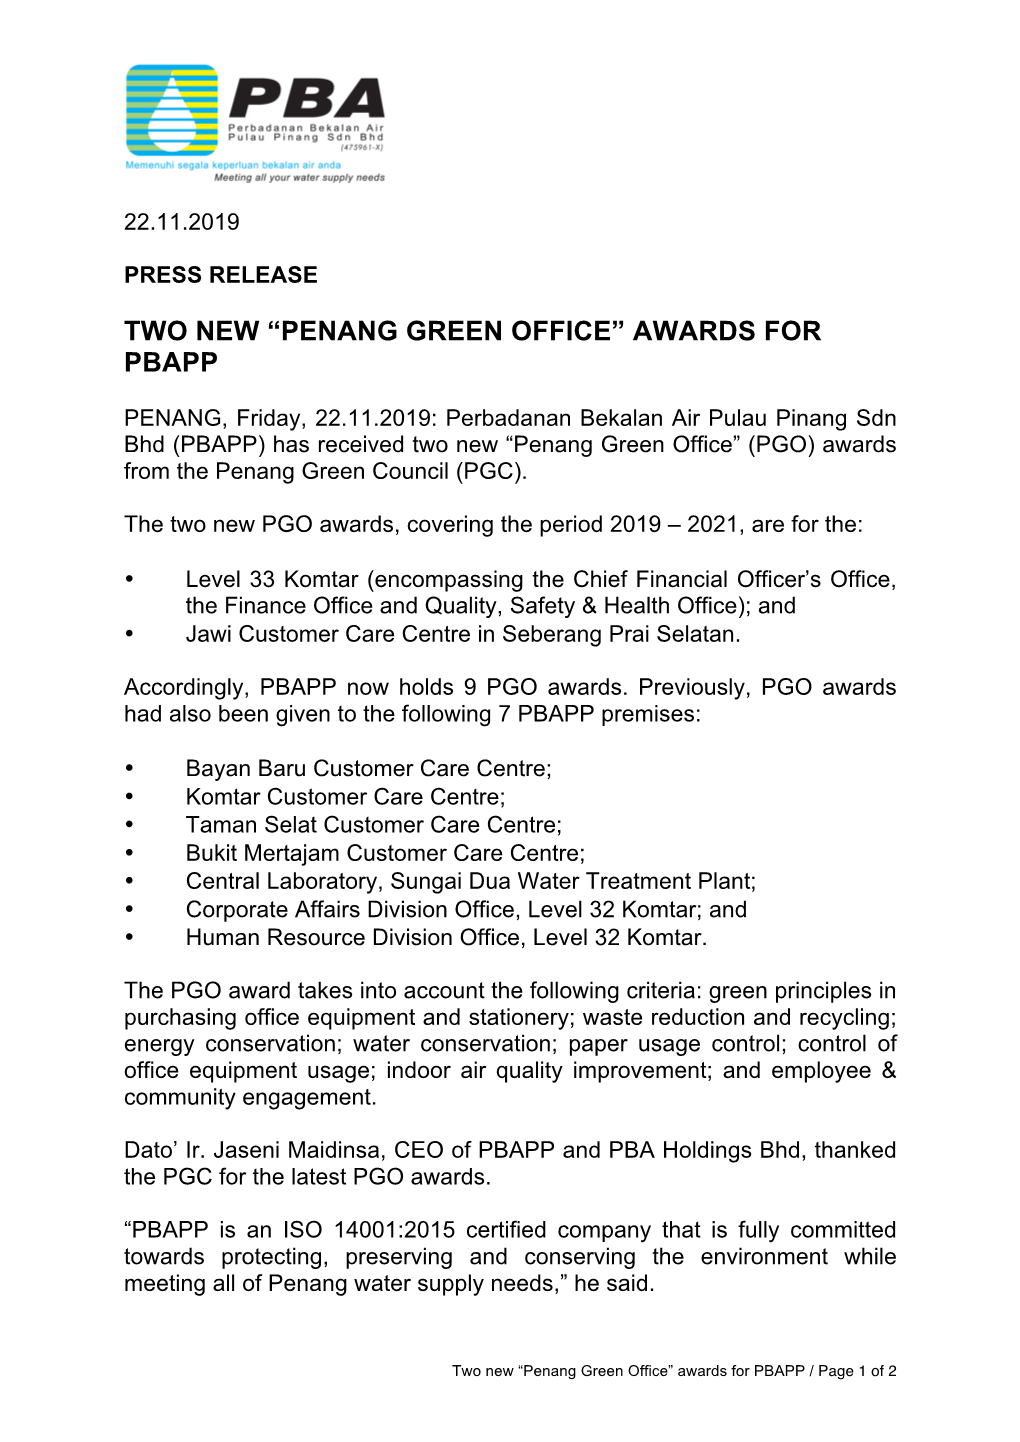 Two New “Penang Green Office” Awards for Pbapp